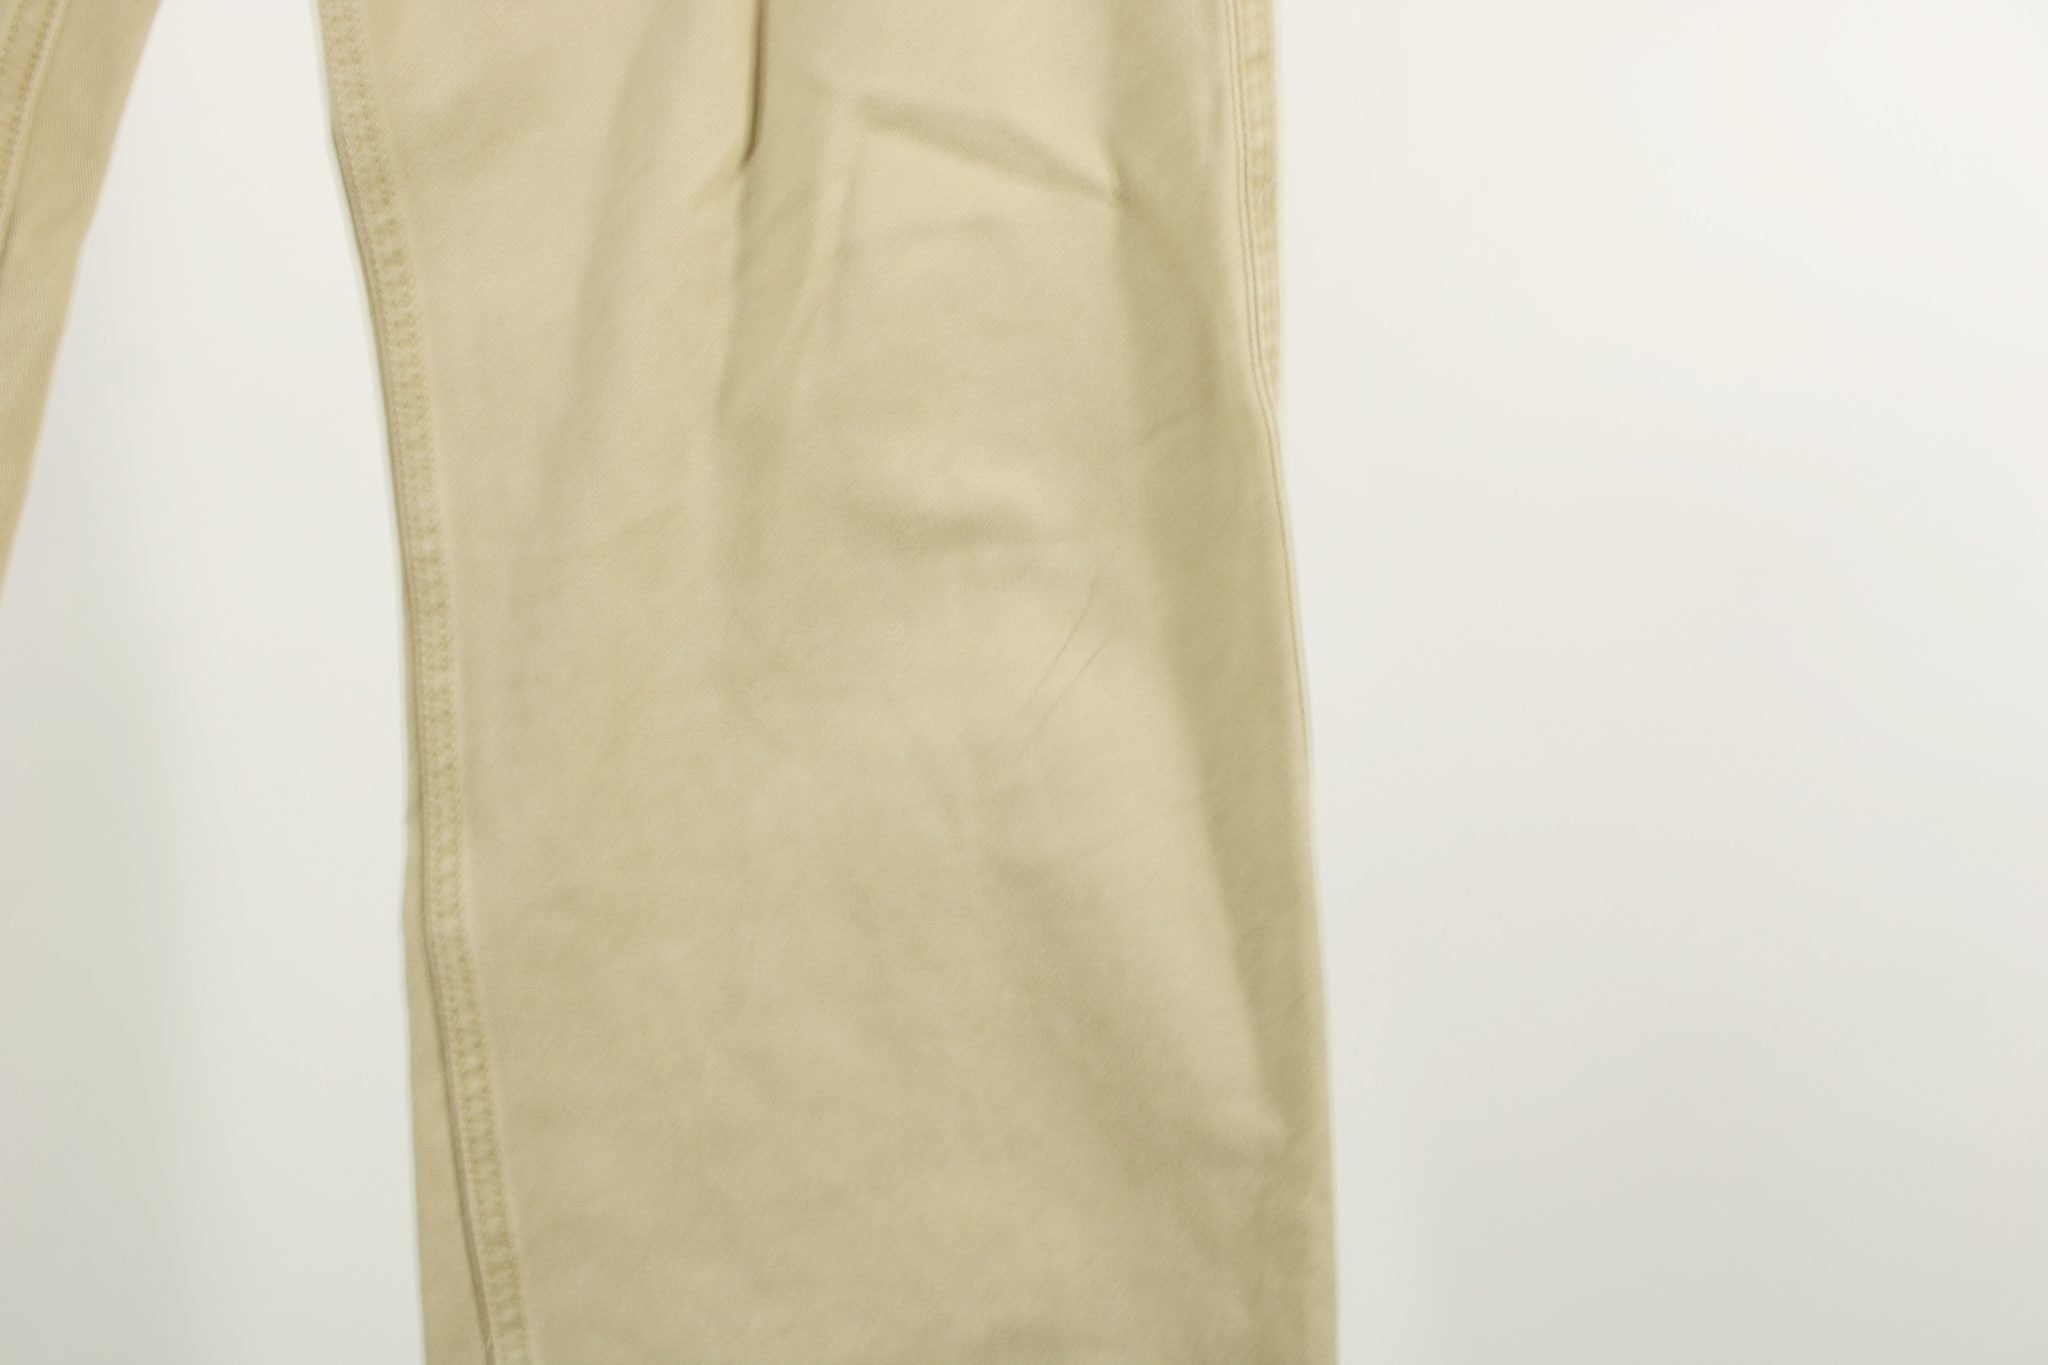 Old Navy Surplus Company Pants | Size 33x30